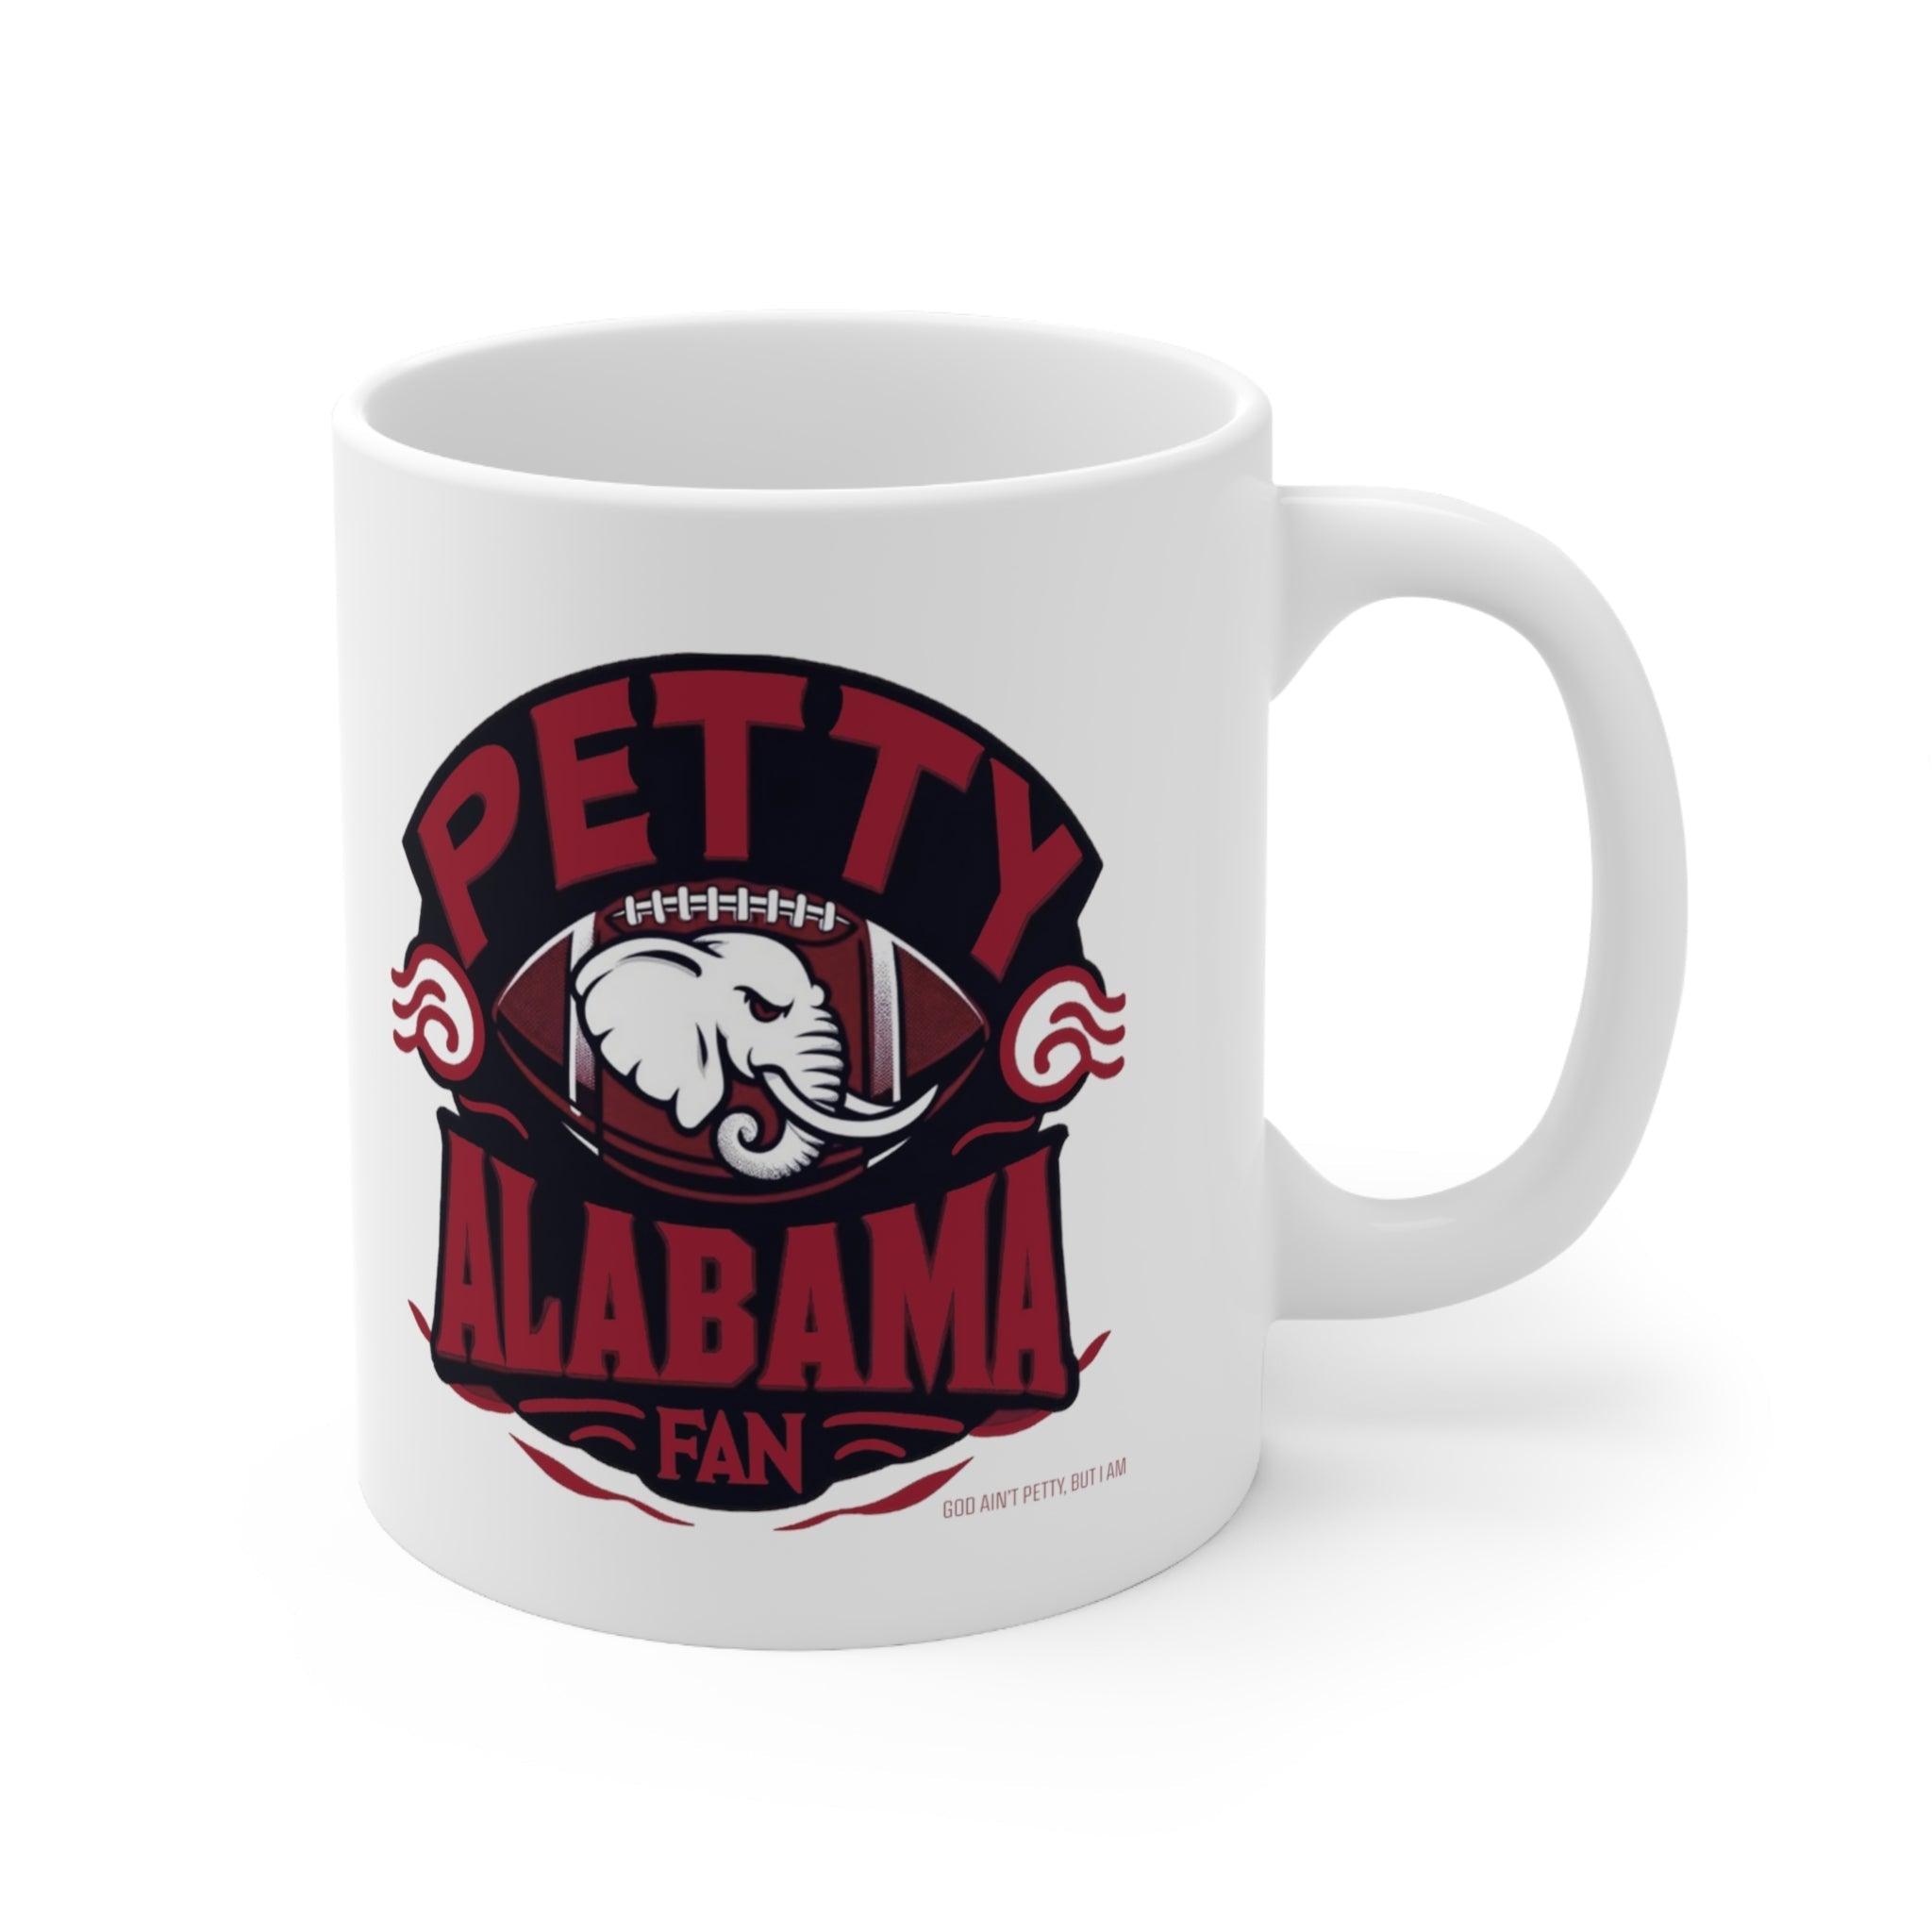 Petty Alabama Fan Mug 11oz (White)-Mug-The Original God Ain't Petty But I Am